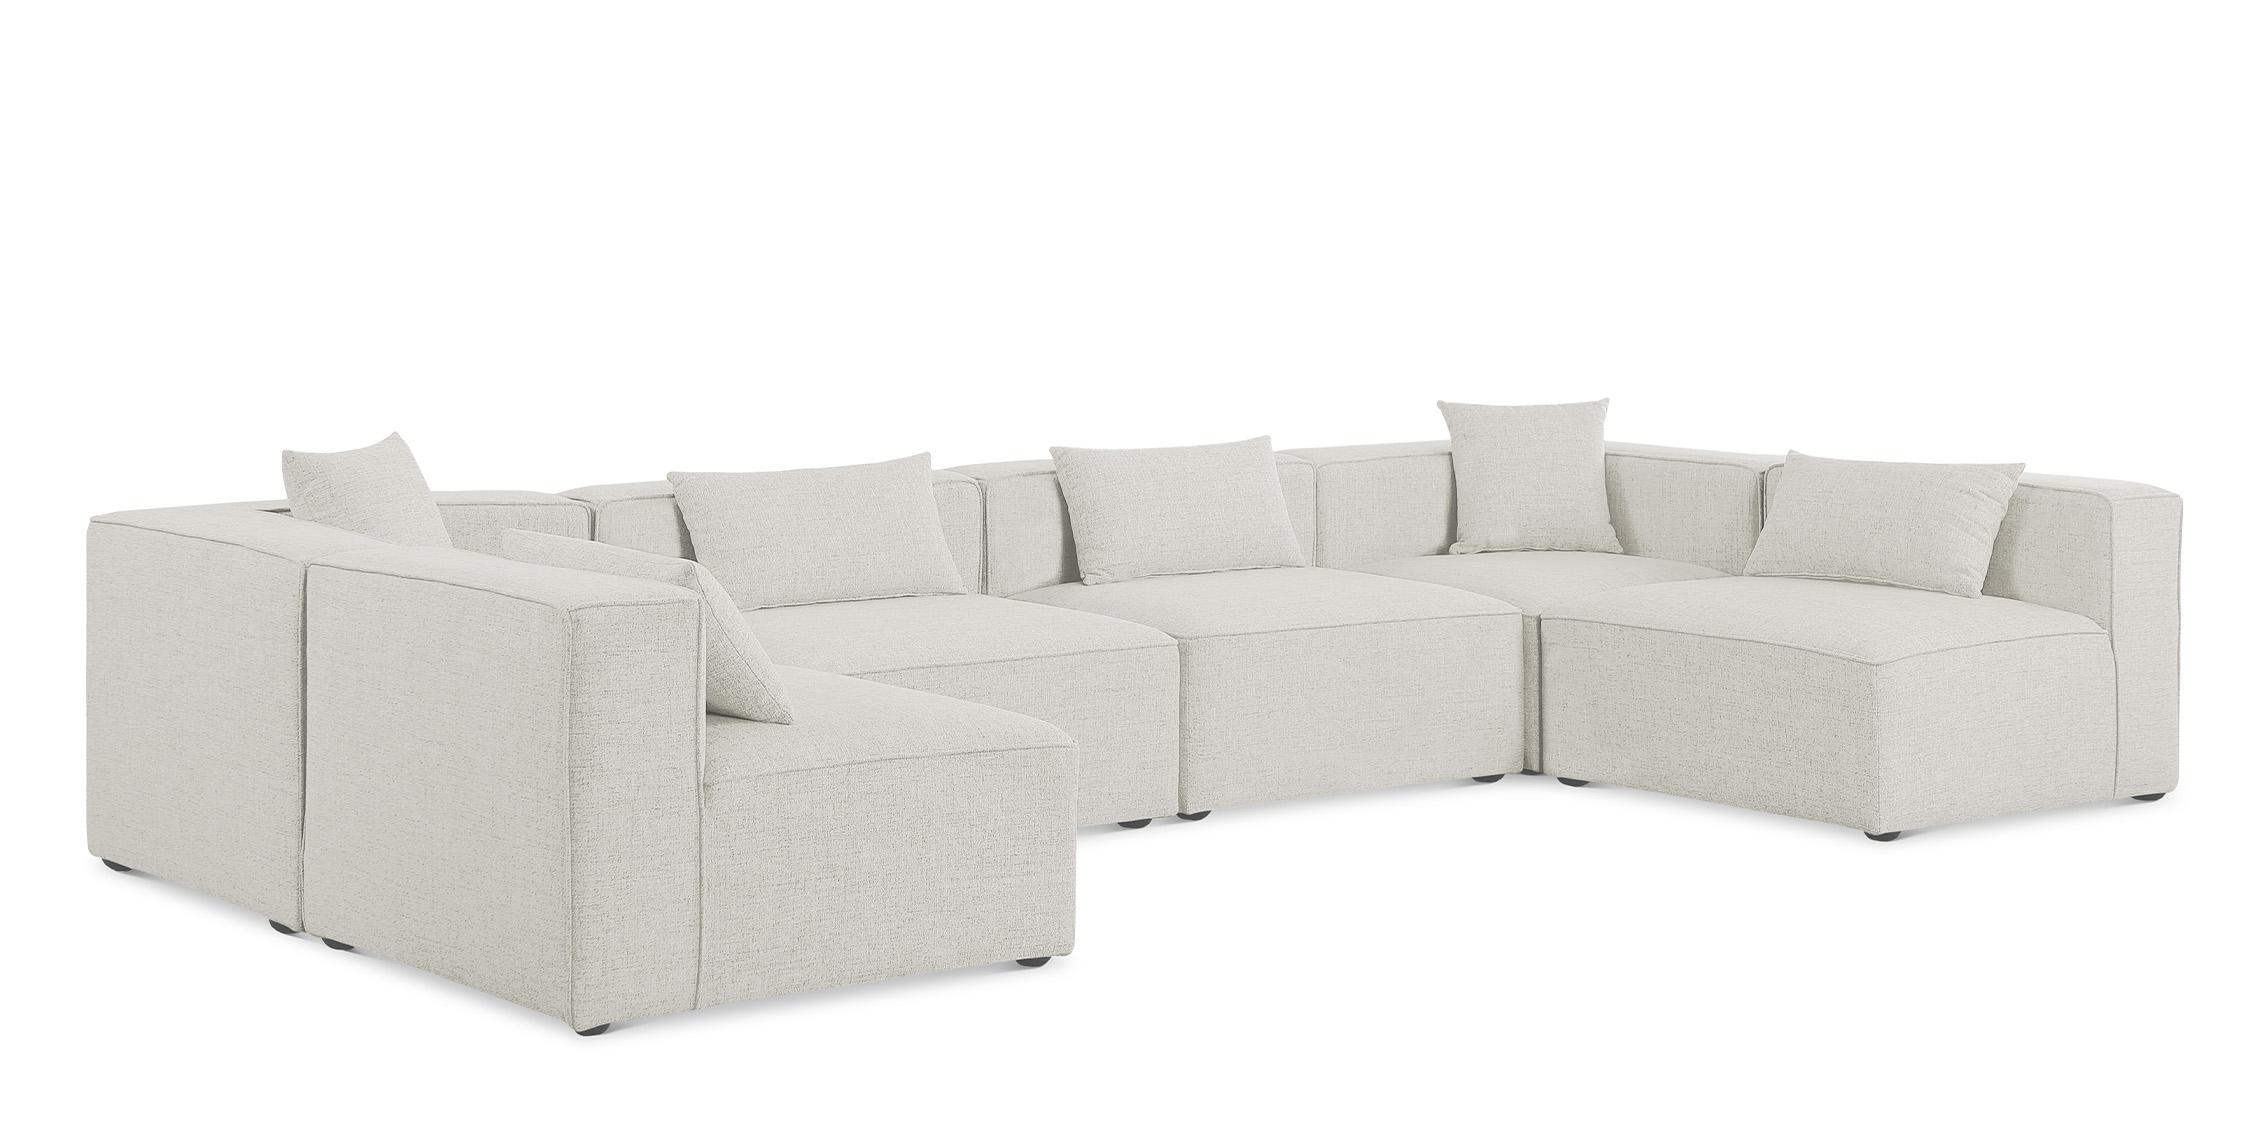 Contemporary, Modern Modular Sectional Sofa CUBE 630Cream-Sec6D 630Cream-Sec6D in Cream Linen